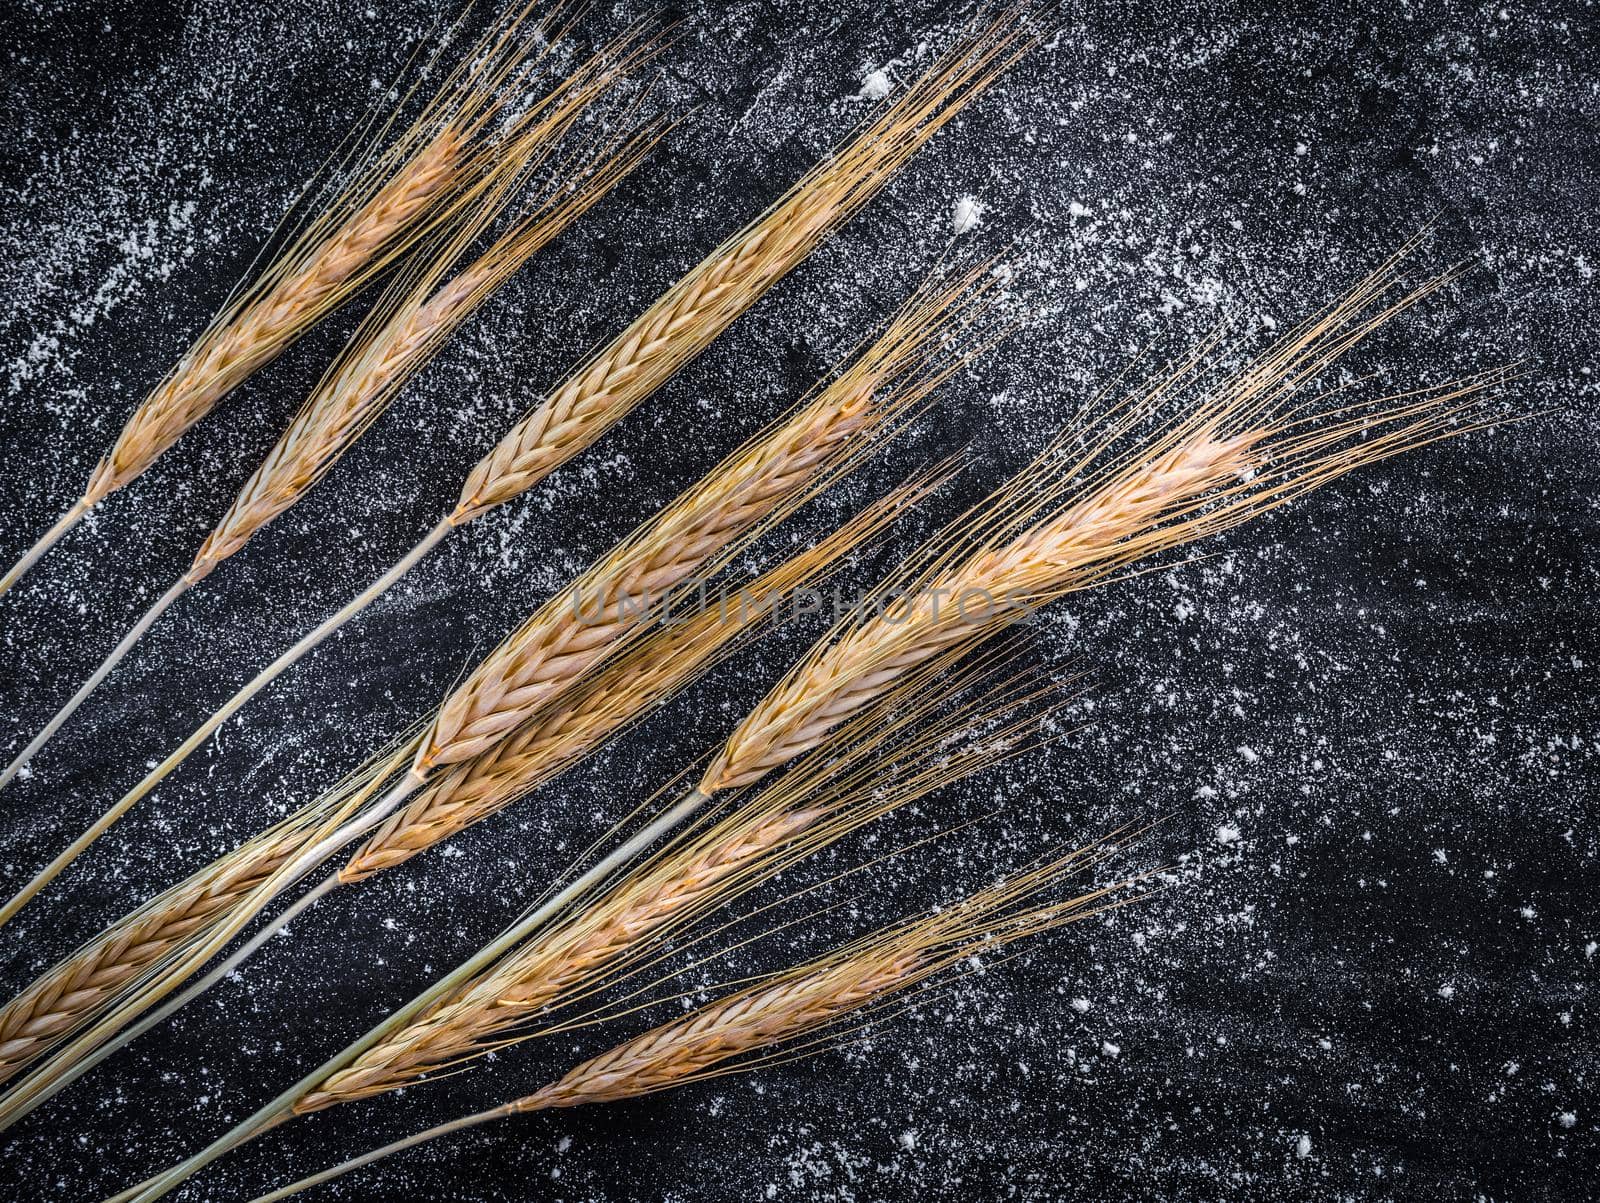 spikelets of wheat by GekaSkr